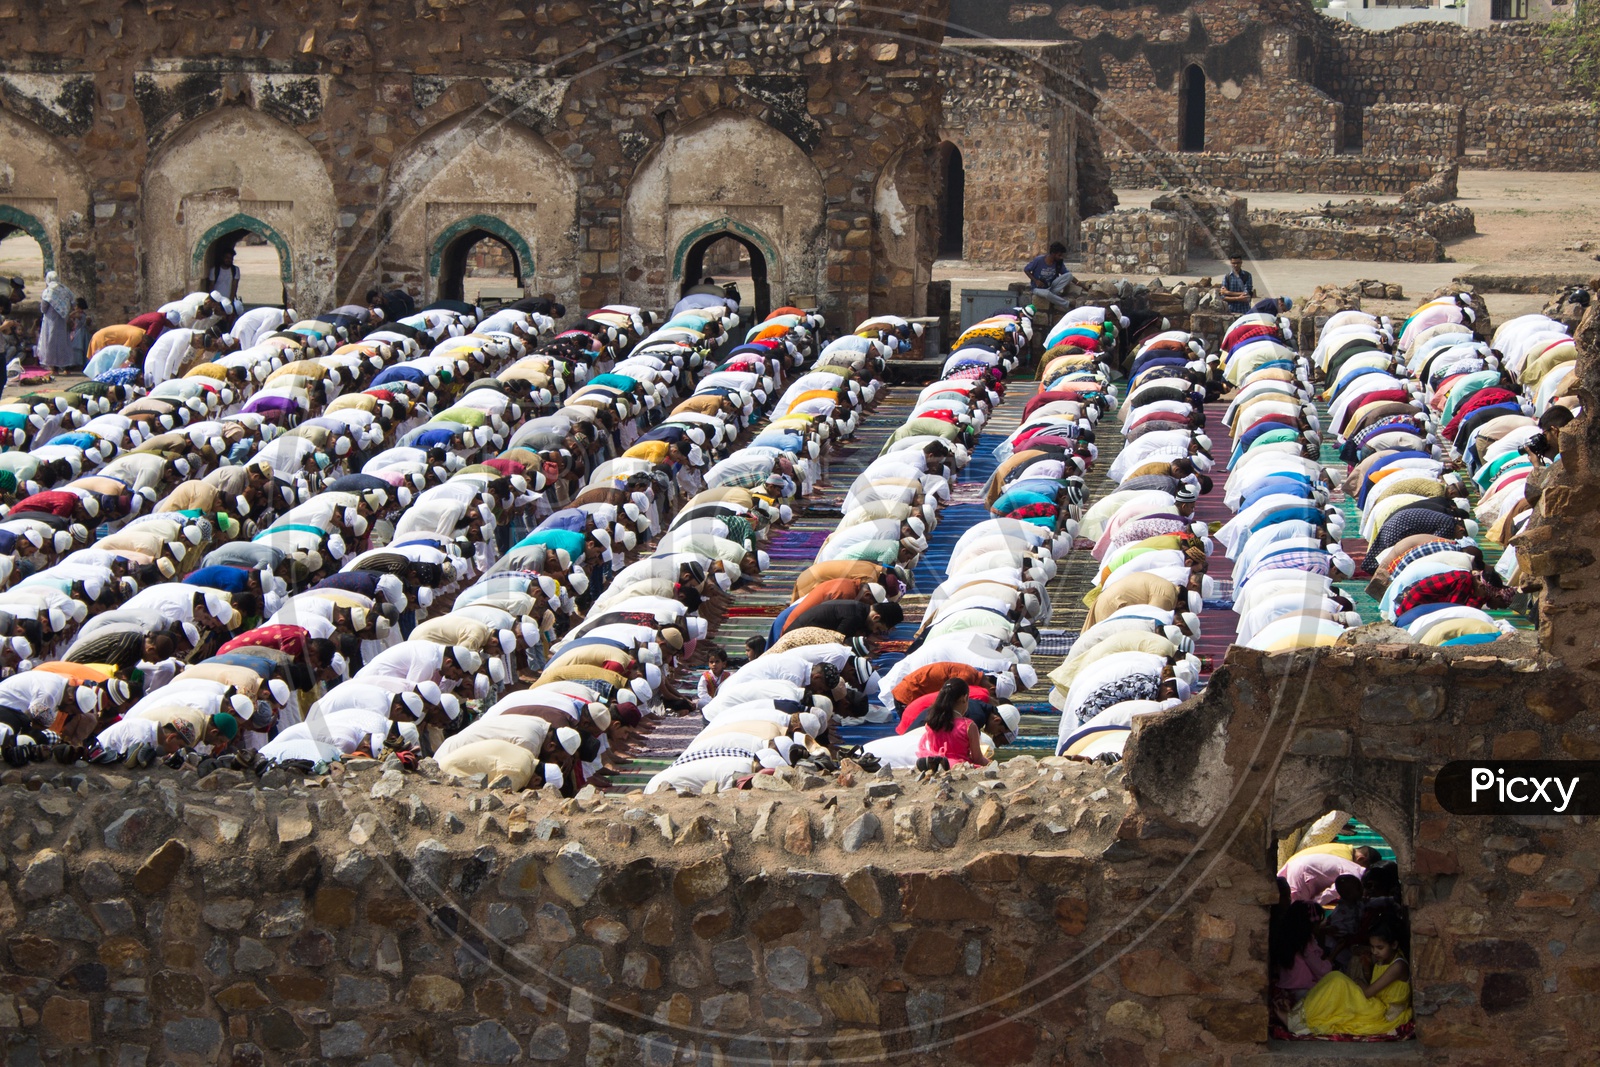 Muslims offering namaz prayer on Eid at Jami Masjid courtyard, Feroz Shah Kotla fort in Delhi